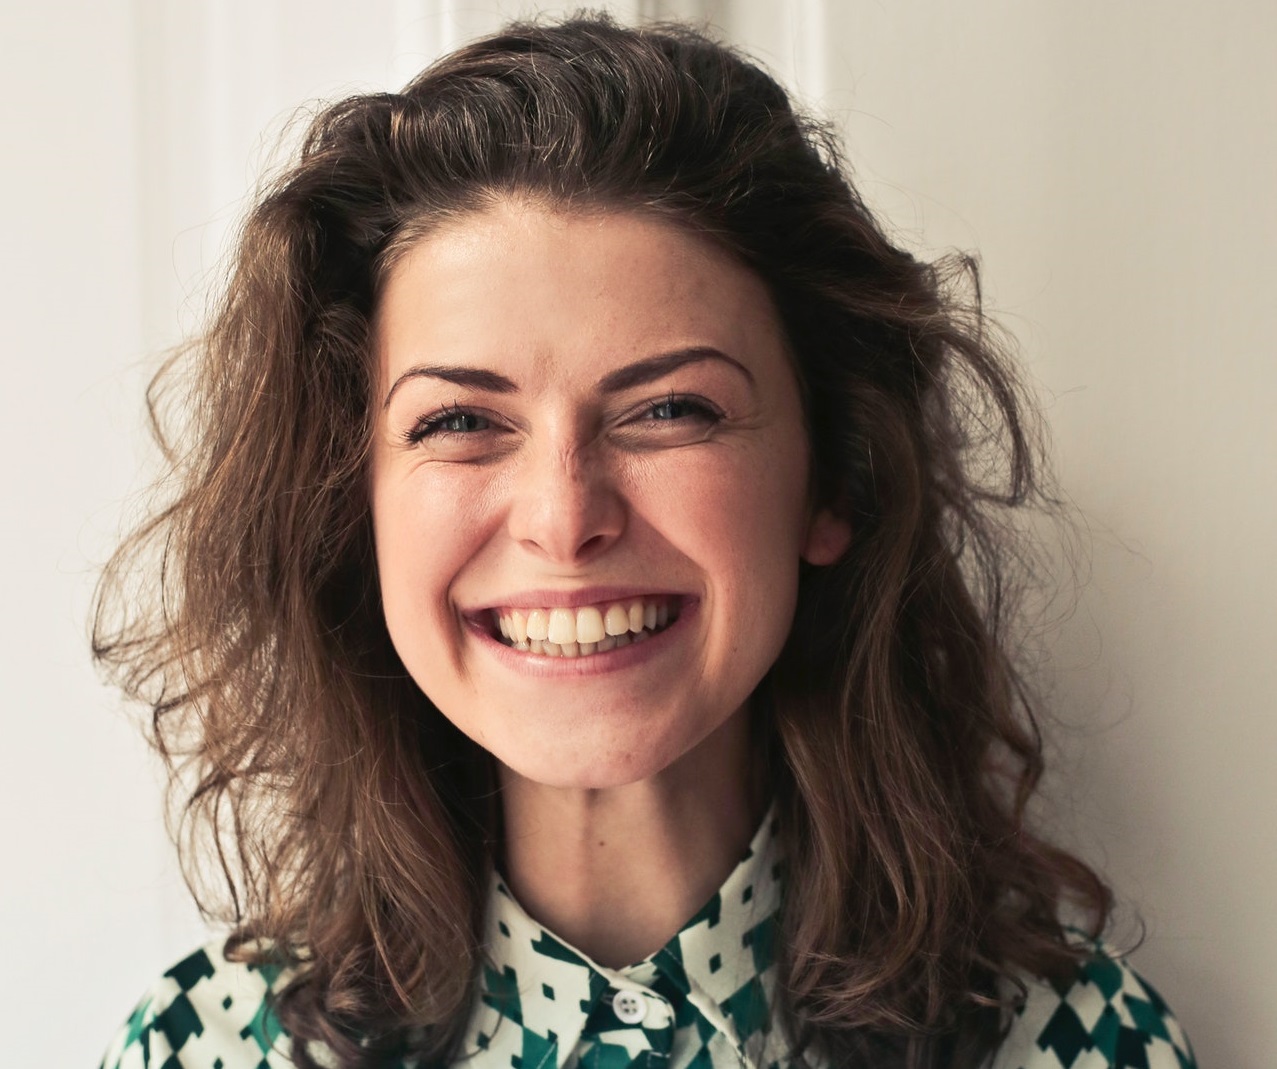 women smiling white teeth